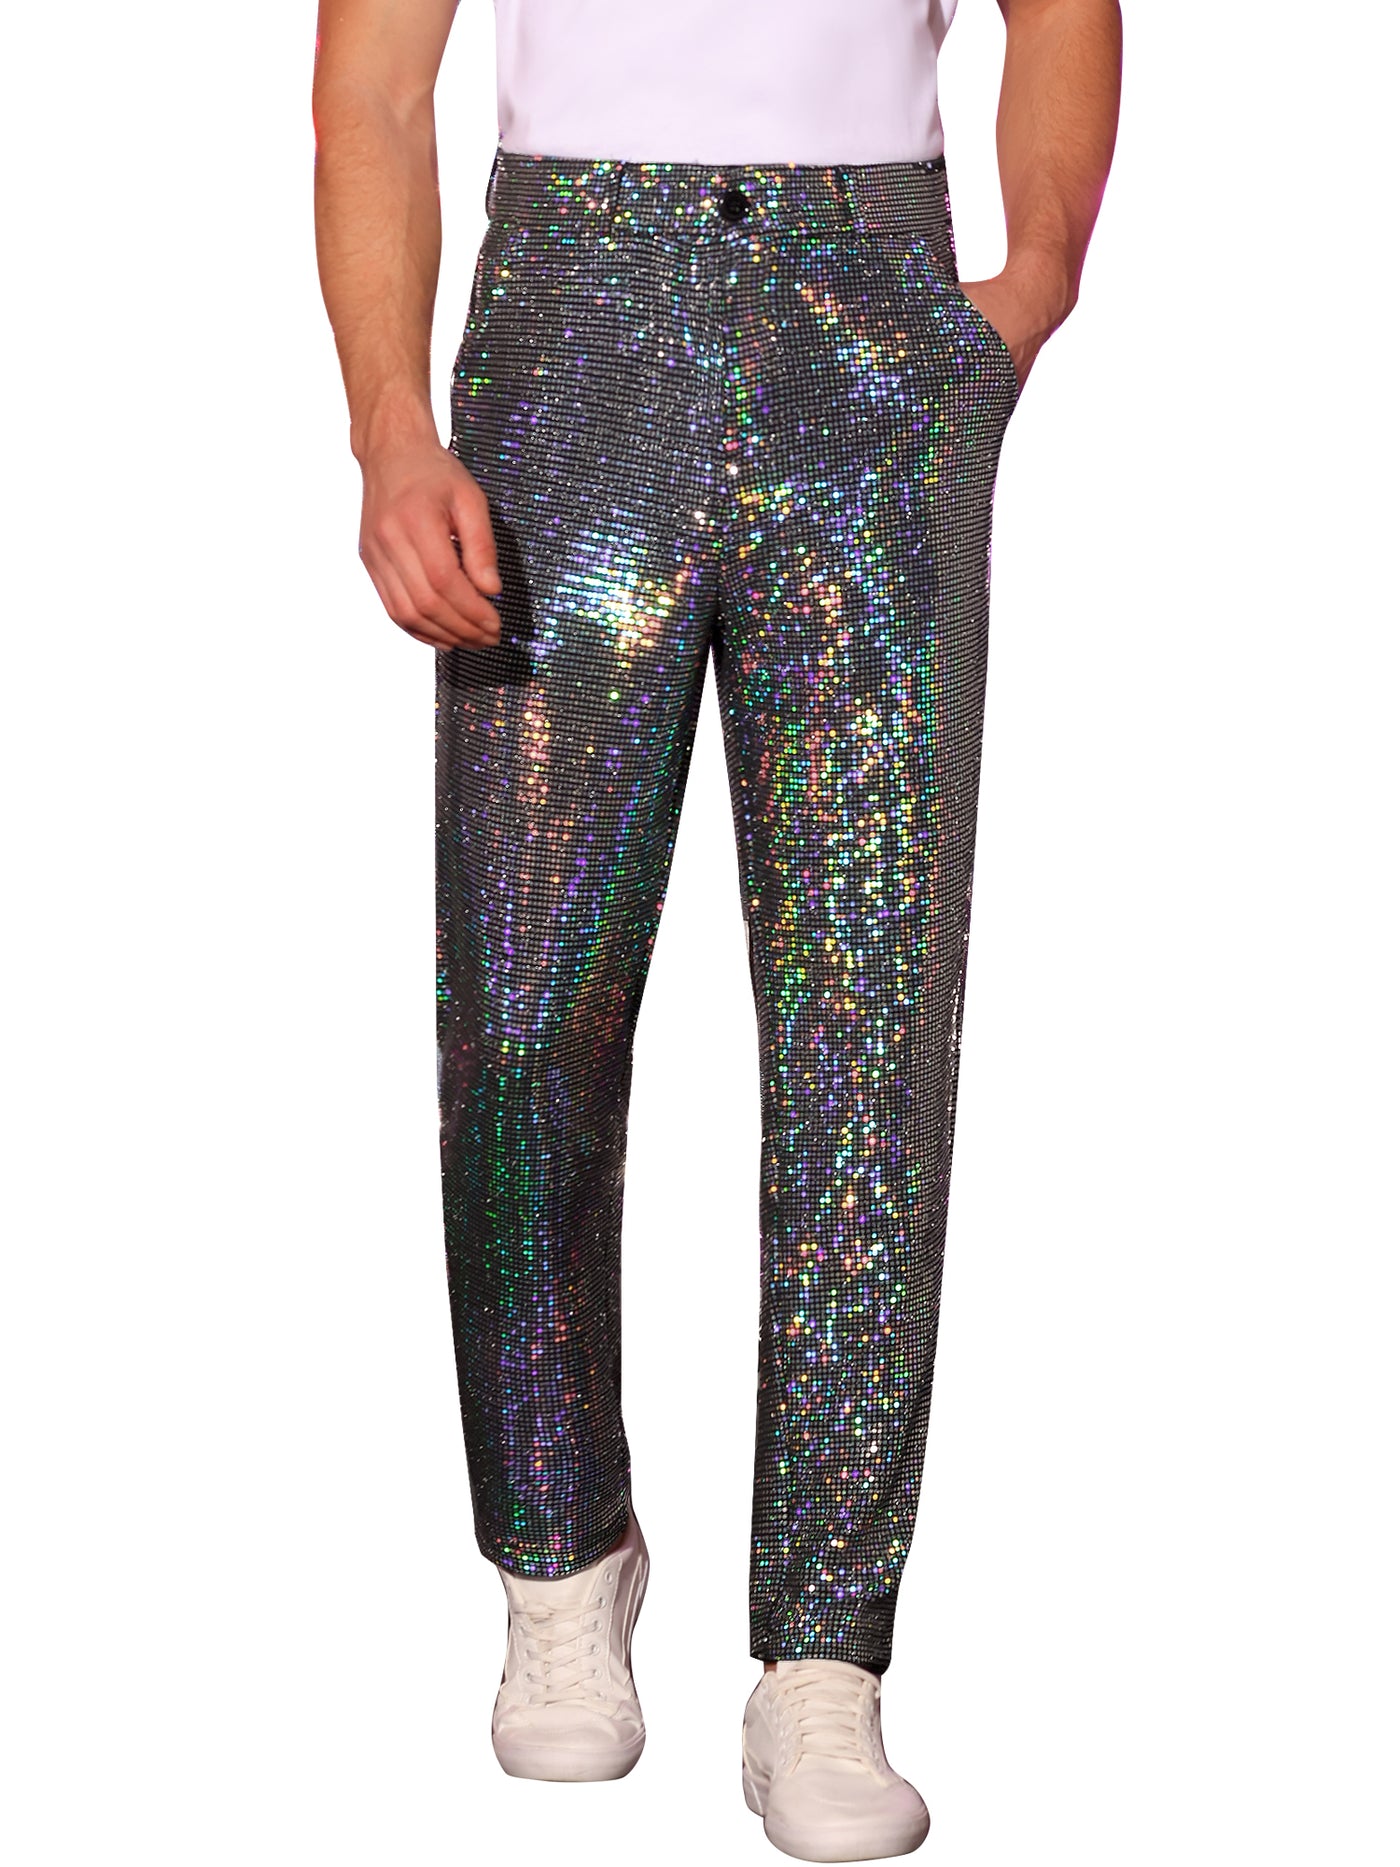 Bublédon Sequins Pants for Men's Party Disco Shiny Sparkly Straight Leg Trousers